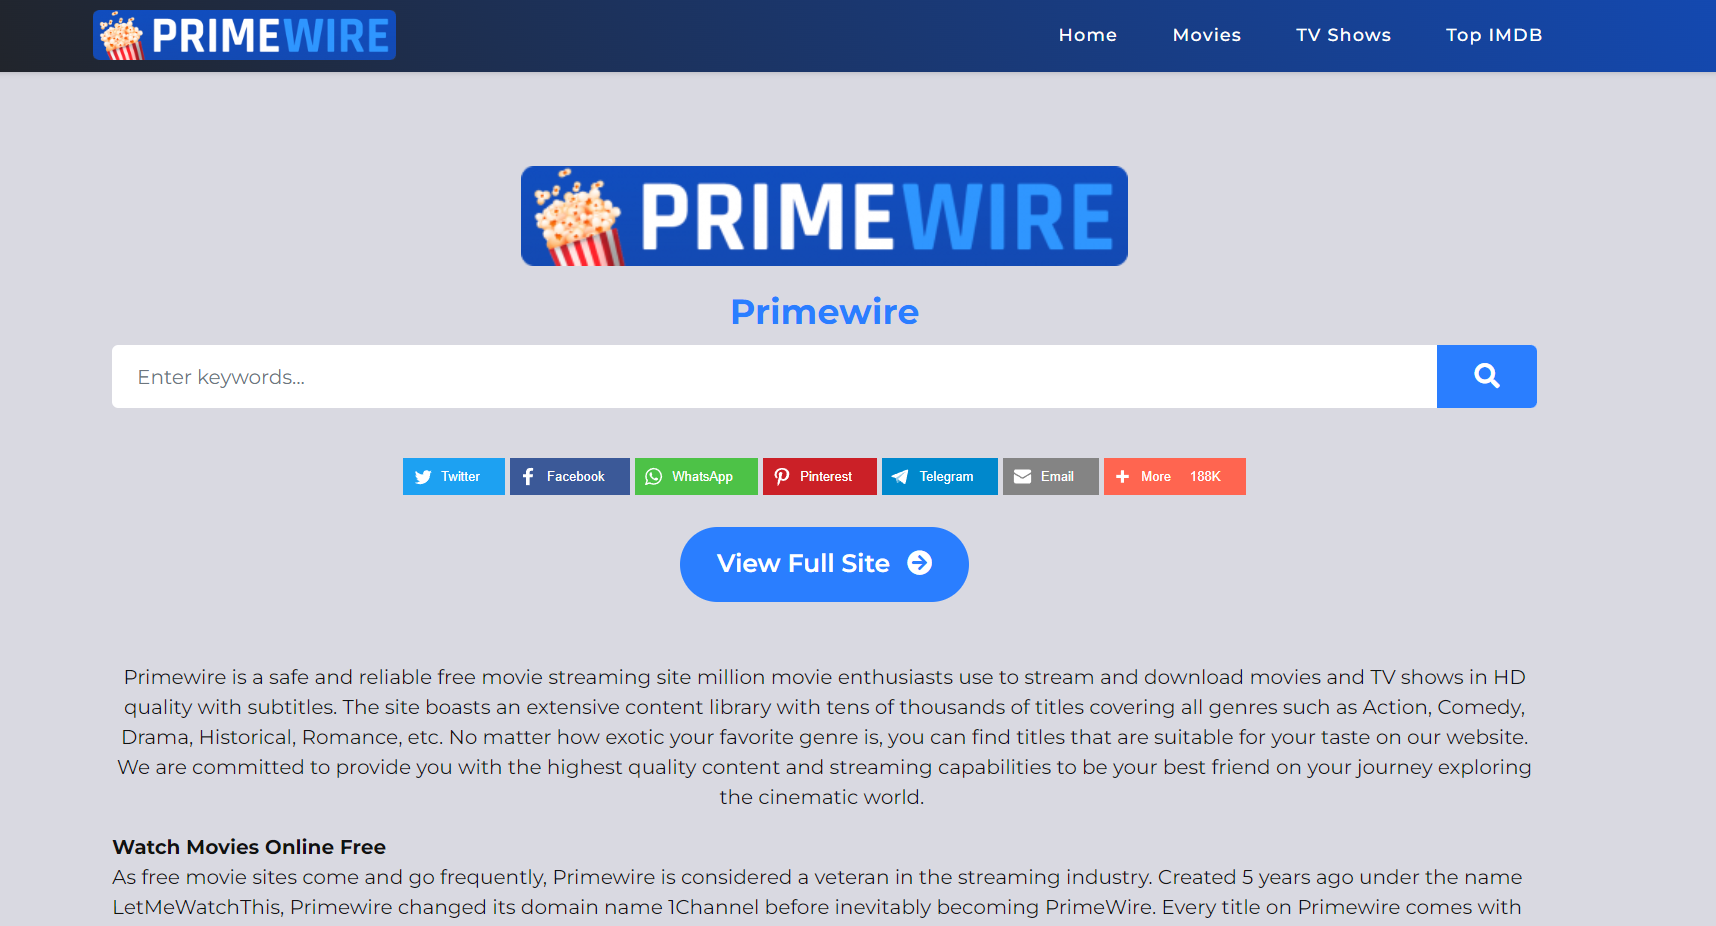 Overview Of PrimeWire